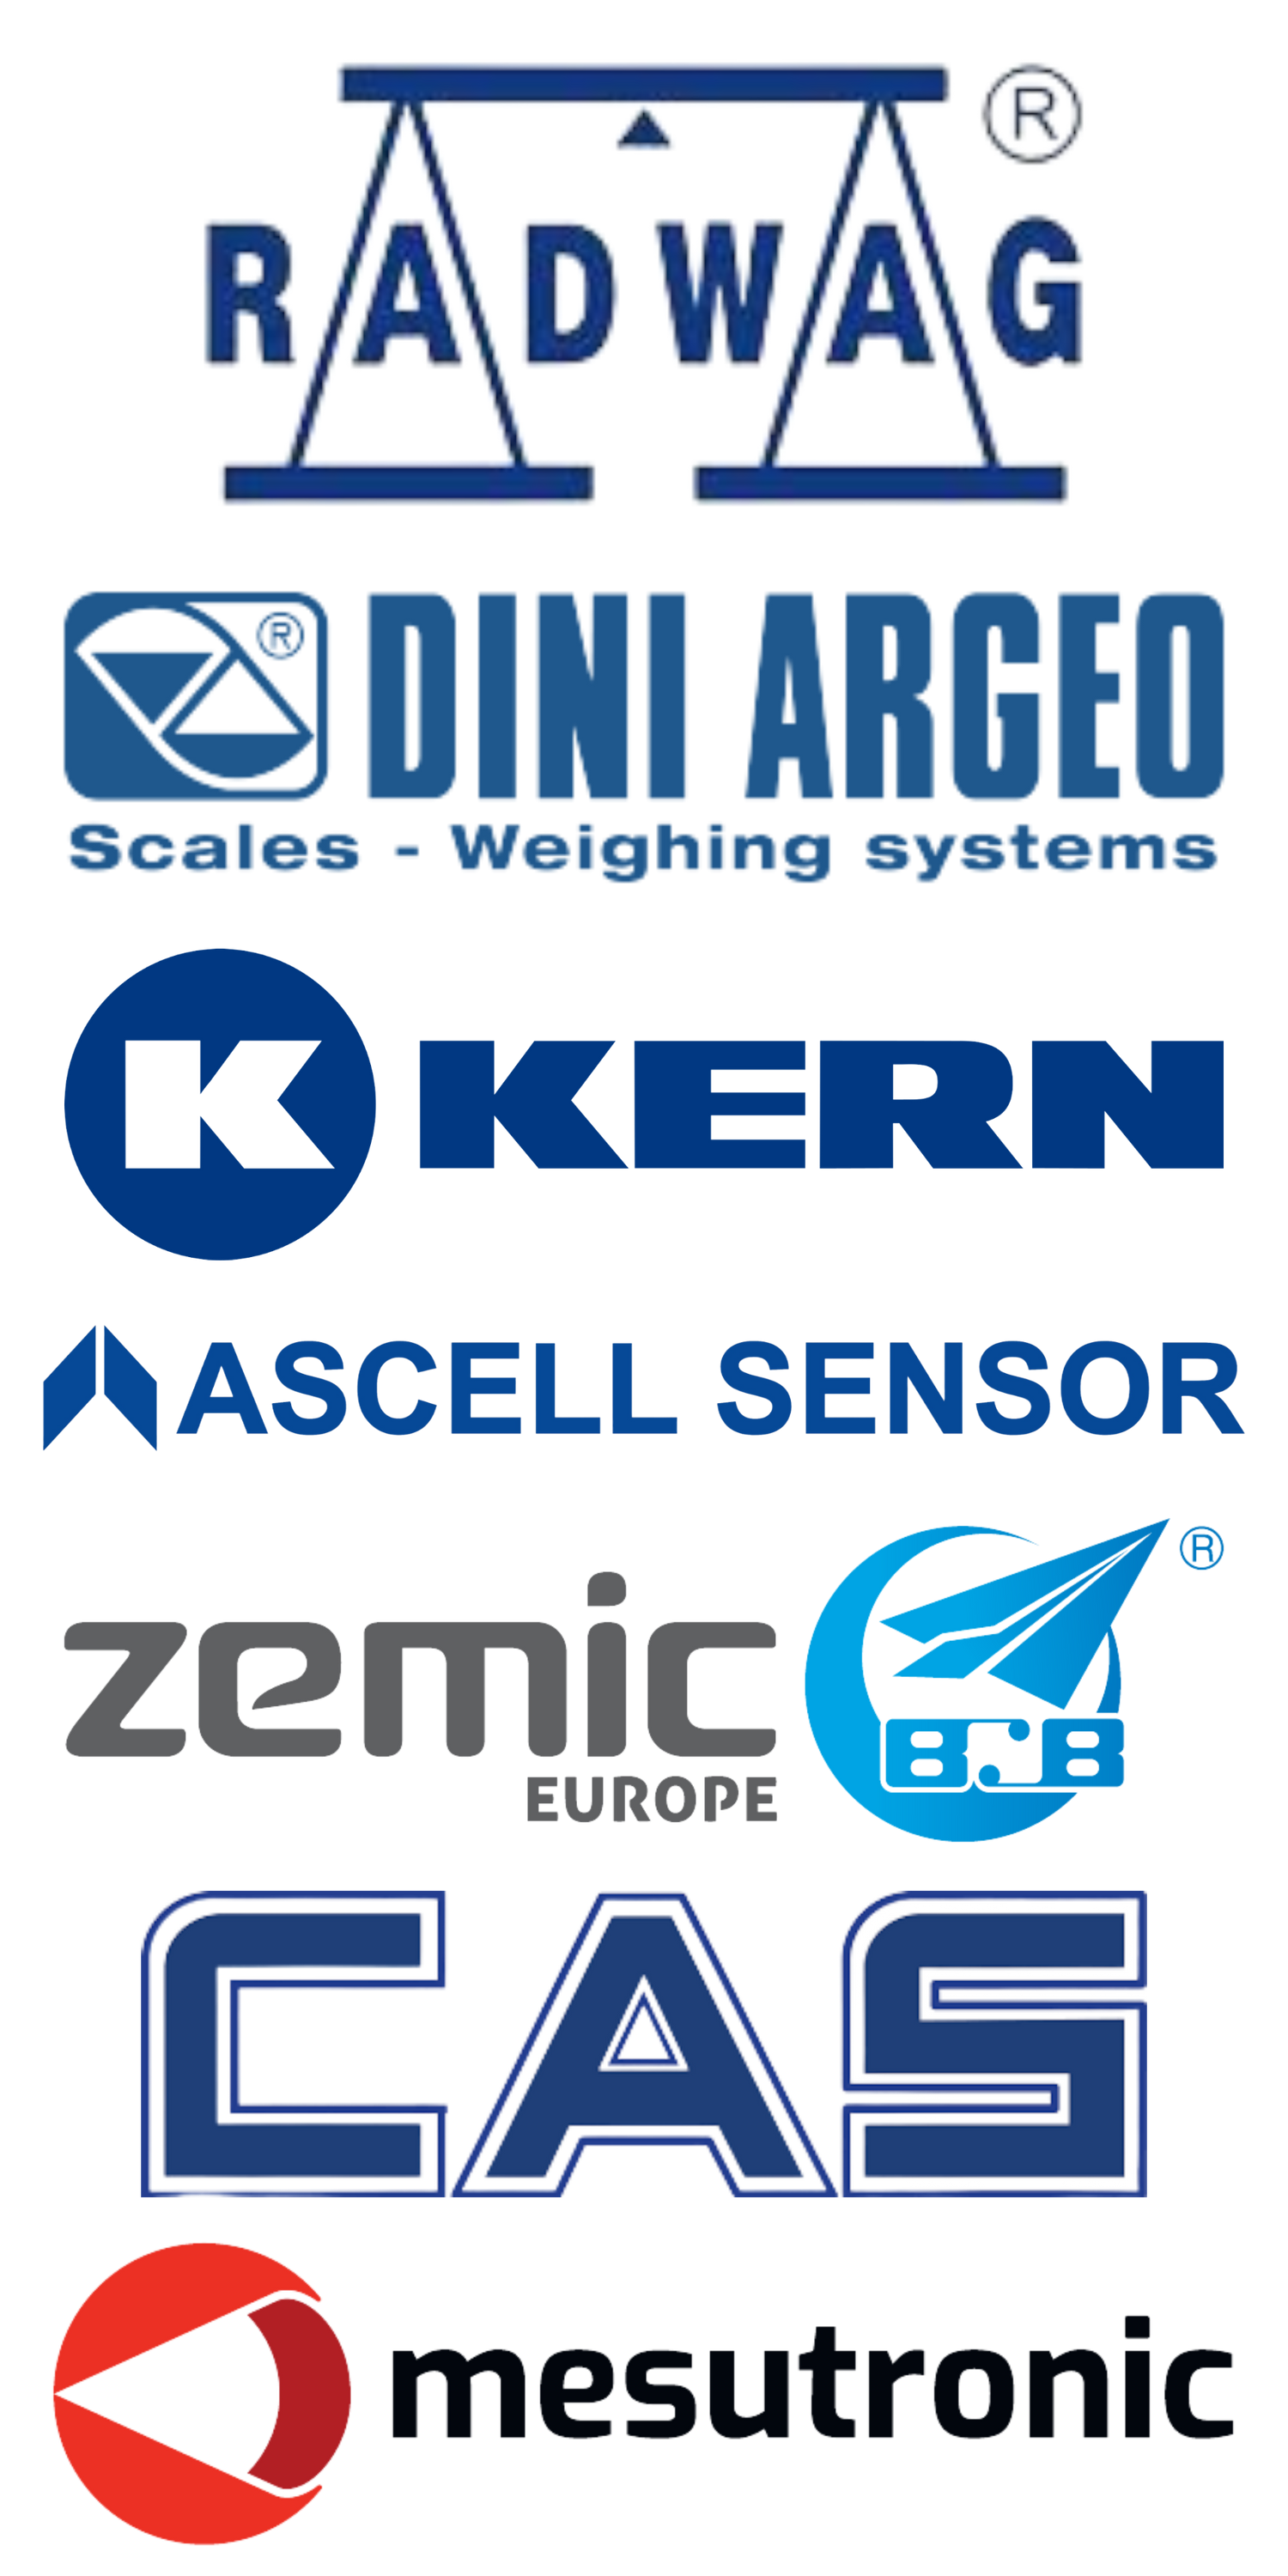 De producenter som LibraTech samarbejder med. Radwag, Dini Argeo, Kern, Ascell Sensor, Zemic Europe, CAS og Mesutronic